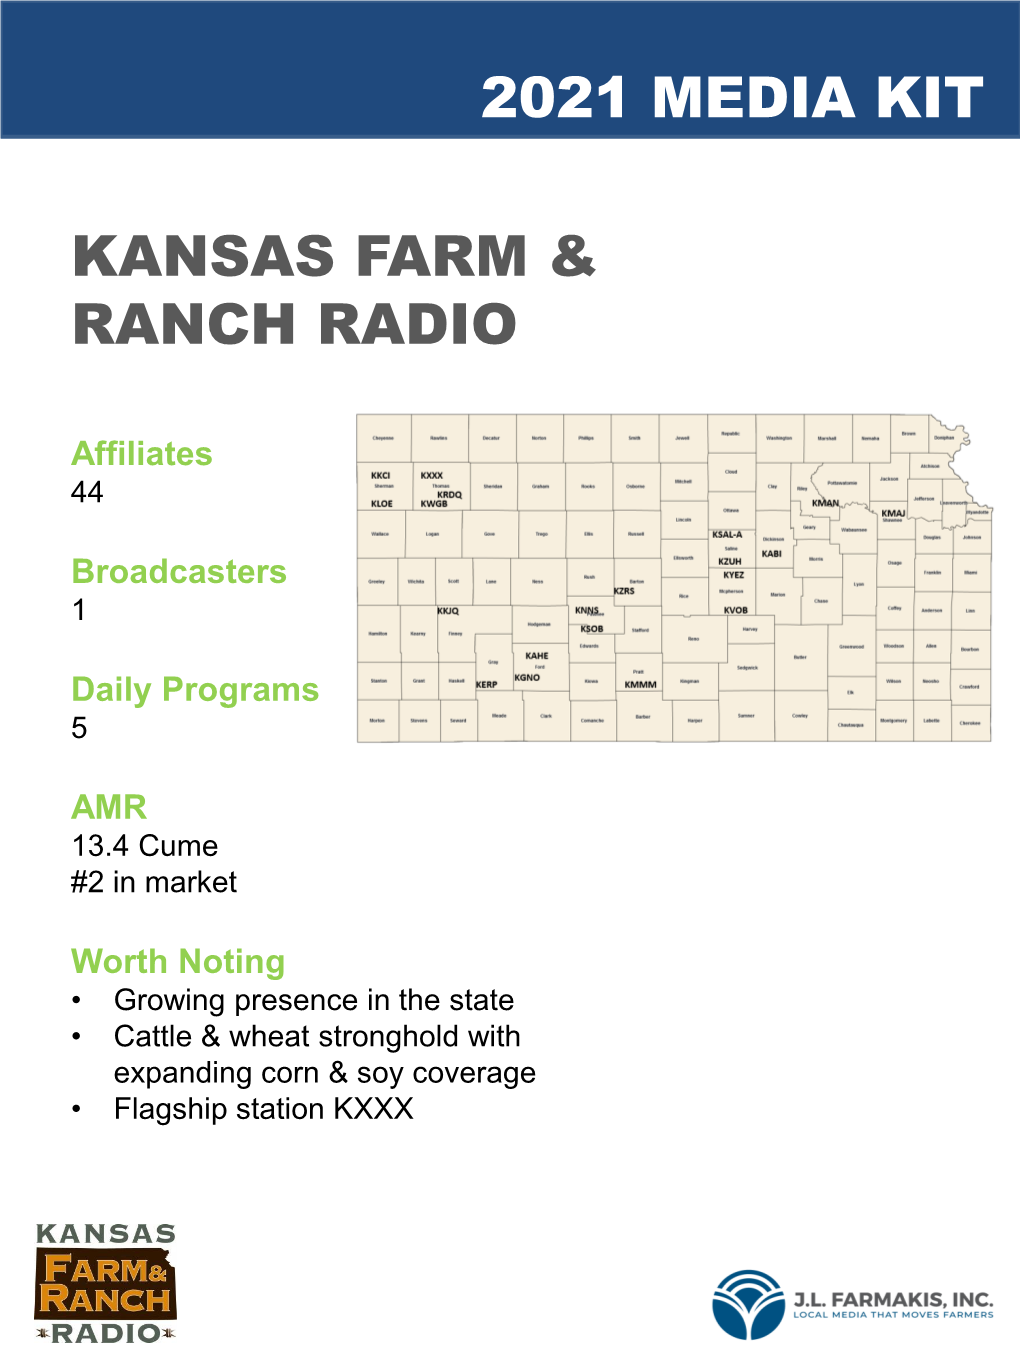 2021 Media Kit Kansas Farm & Ranch Radio